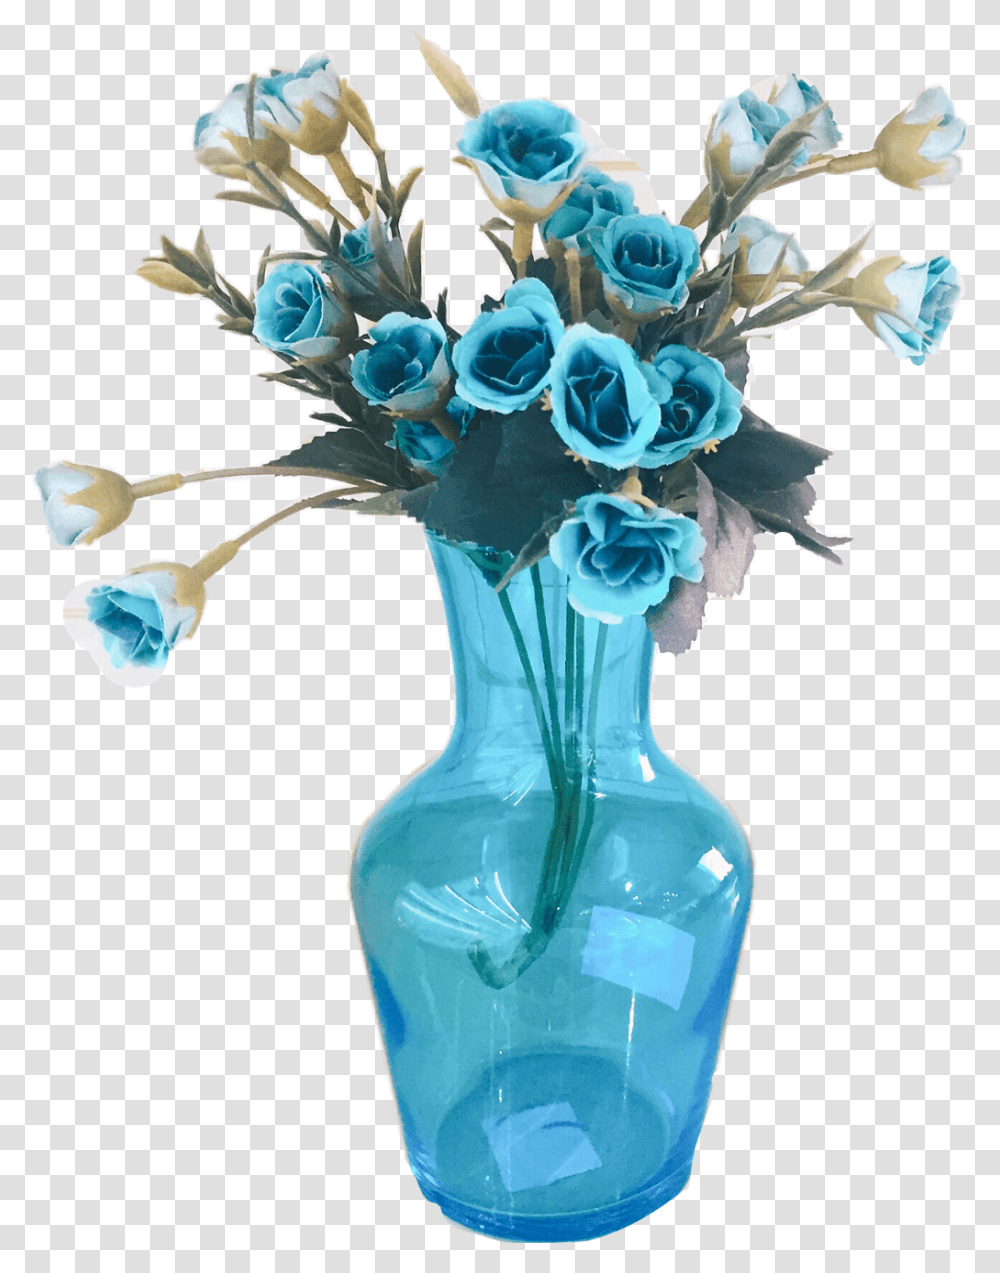 Teal Turquoise Glass Vase Flowers Decor Roses Bouquet, Jar, Pottery, Porcelain Transparent Png